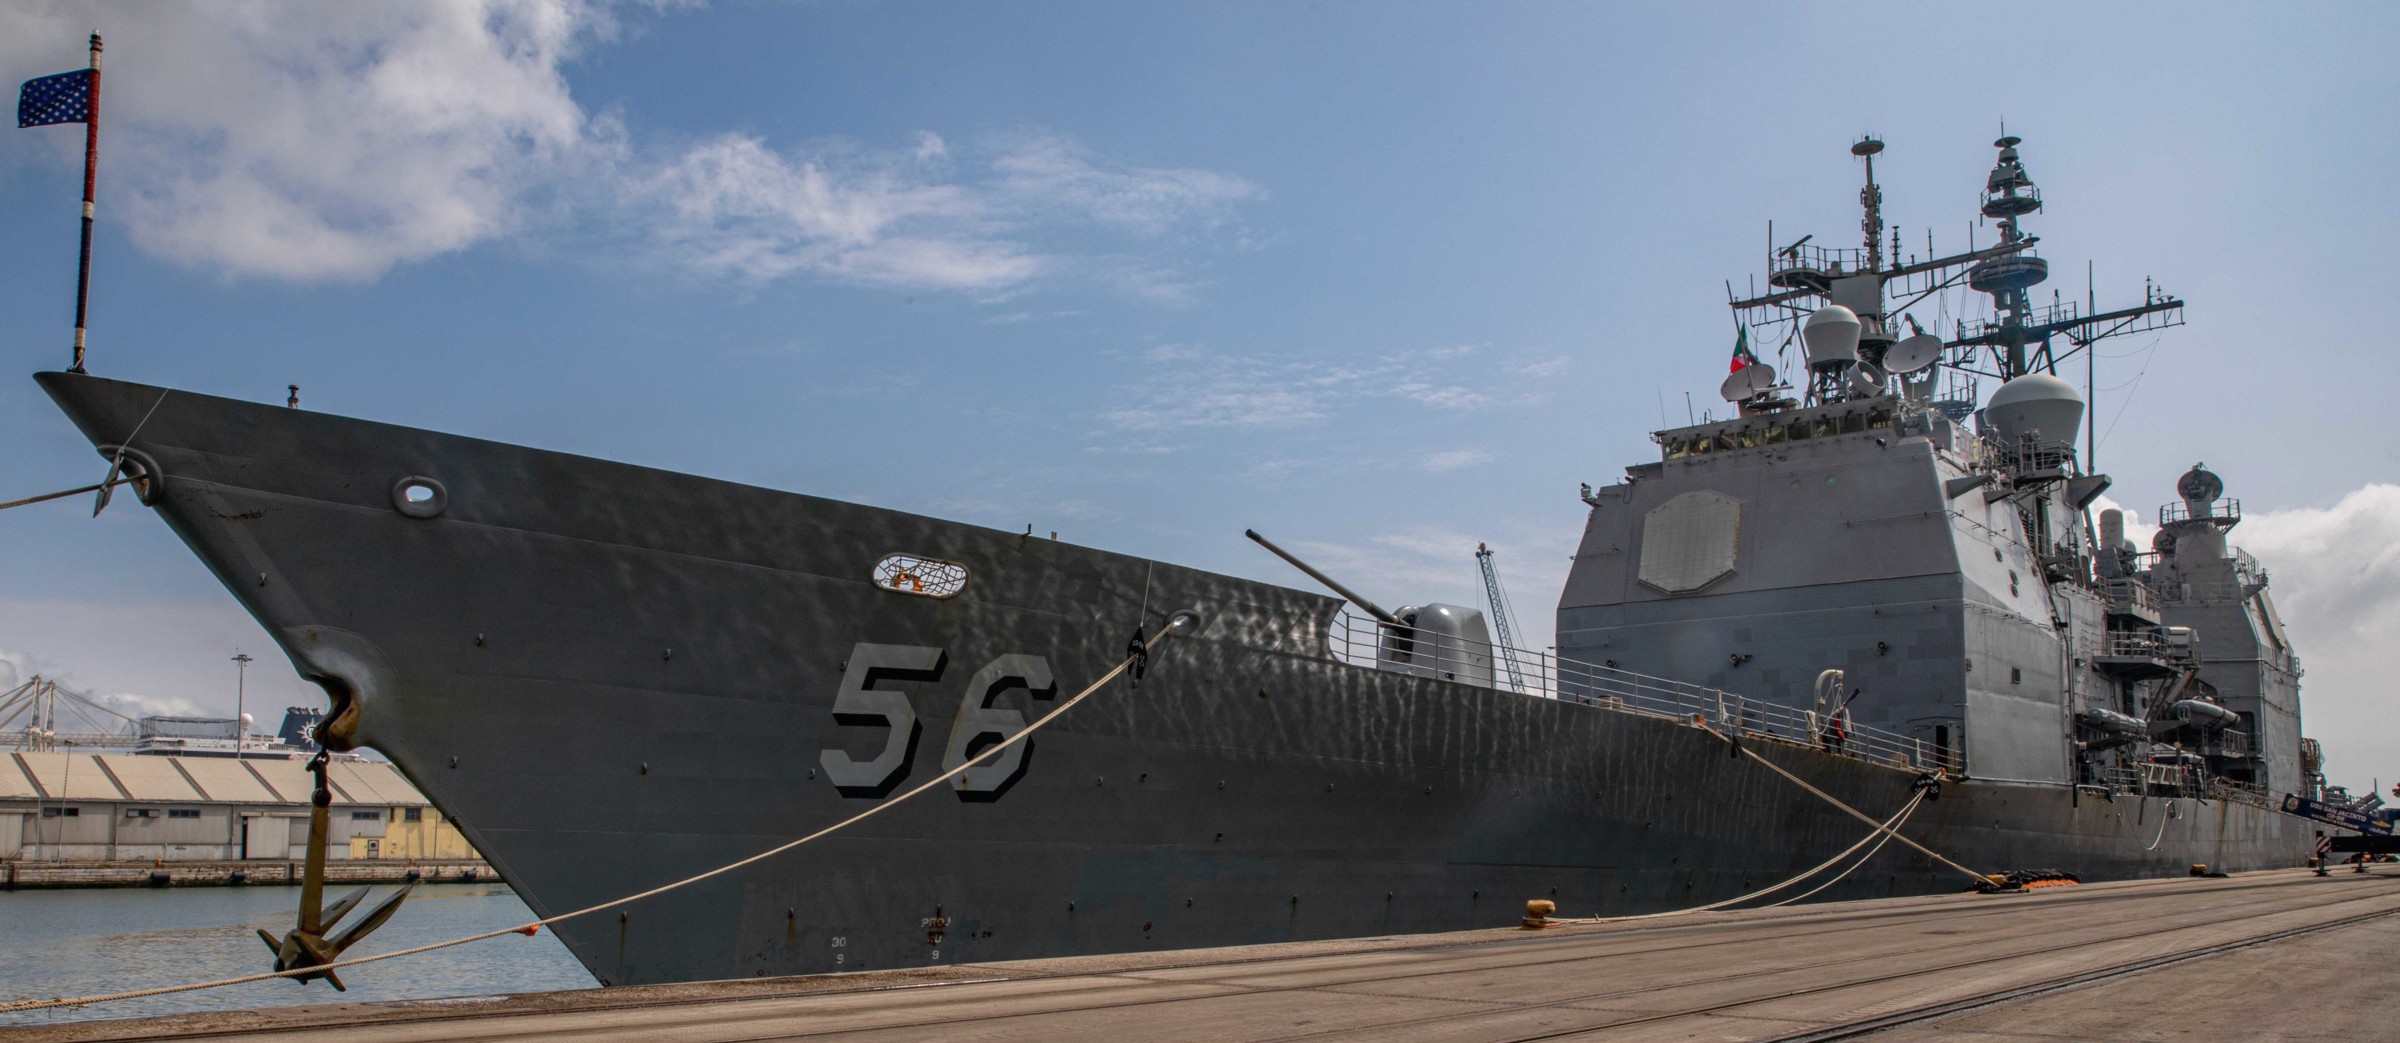 cg-56 uss san jacinto ticonderoga class guided missile cruiser aegis us navy marghera venice italy 125